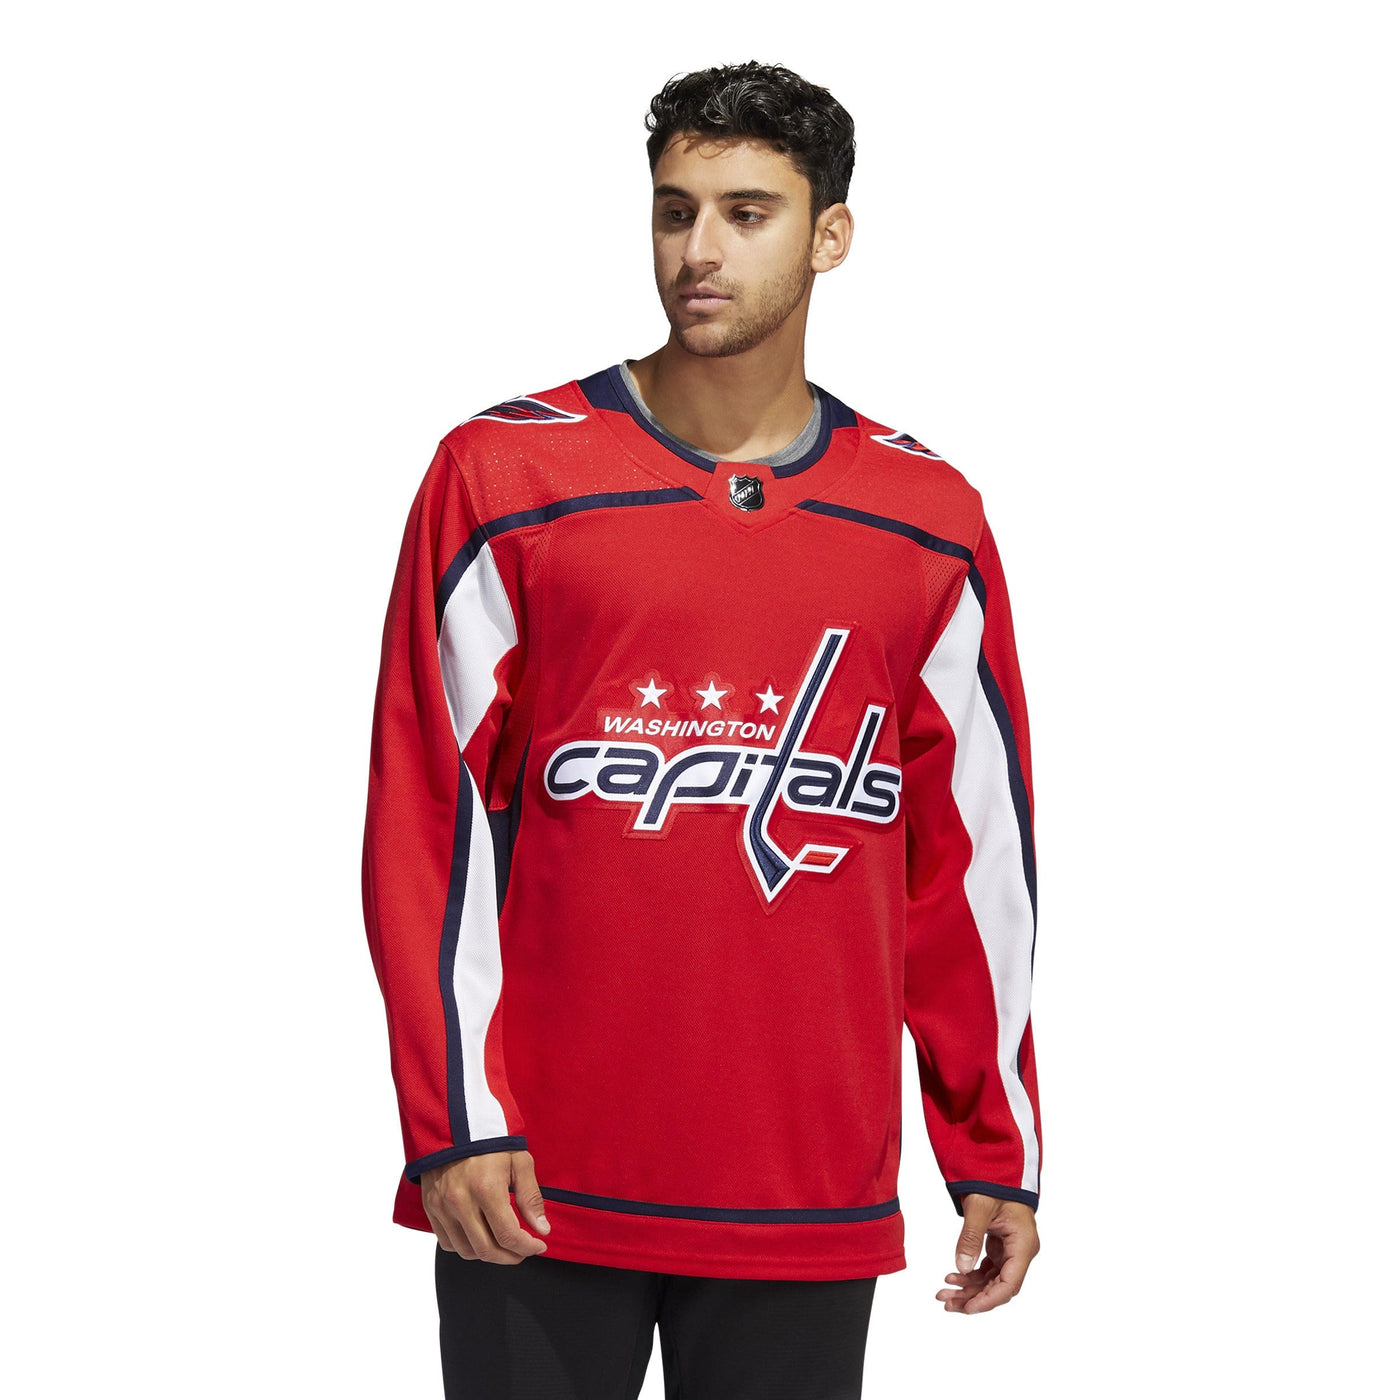 Washington Capitals Home Adidas PrimeGreen Senior Jersey - The Hockey Shop Source For Sports